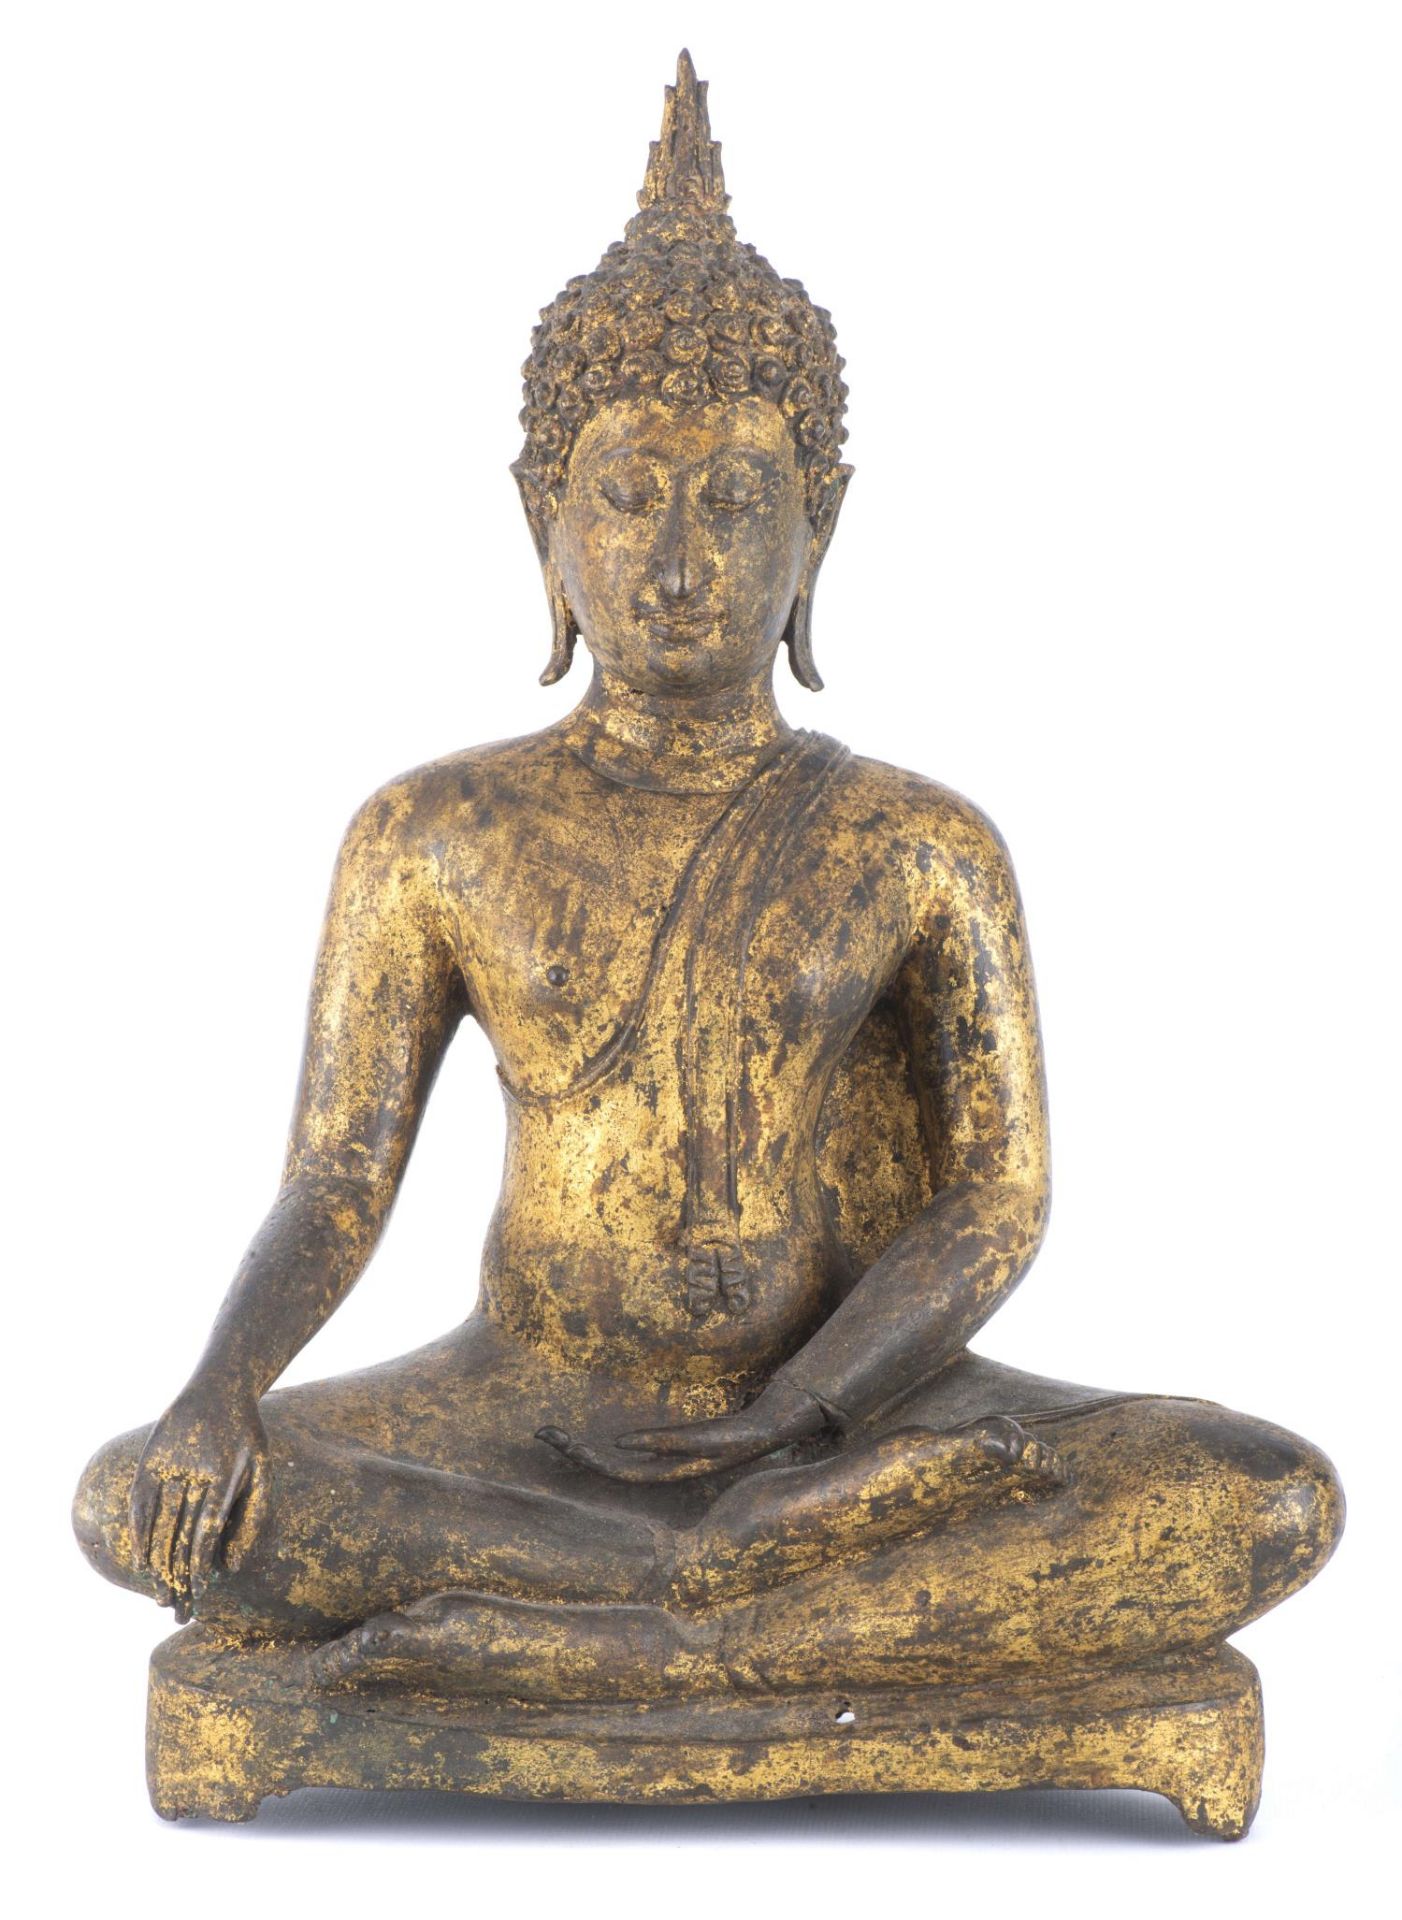 Bouddha de style Ayuttaya en bronze à patine verte et or, XIV-XVIe